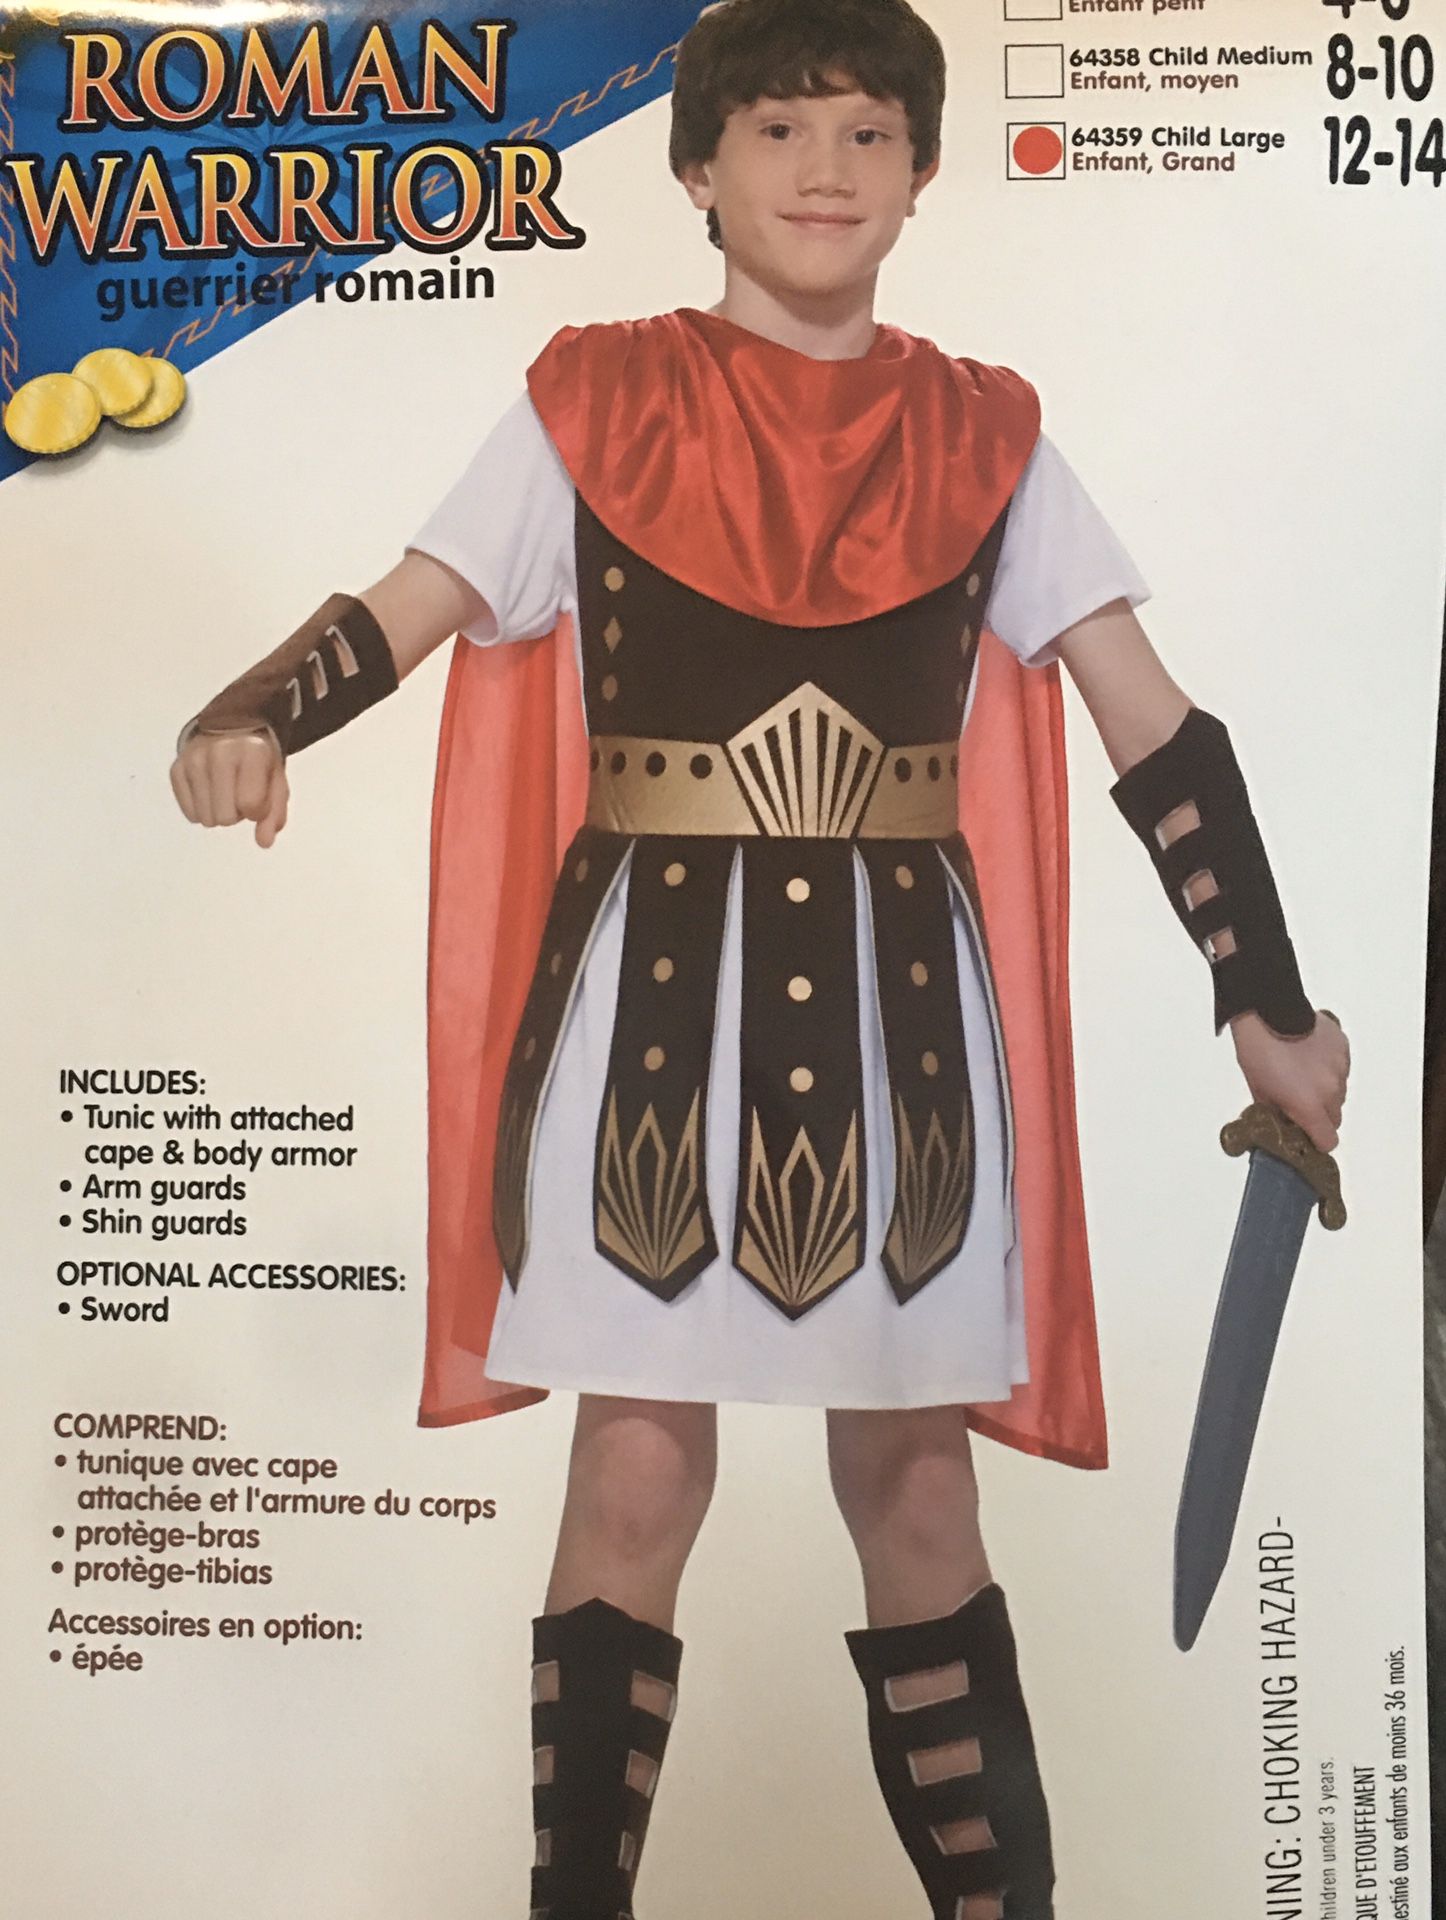 Roman warrior costume - Kids Large (12-14)